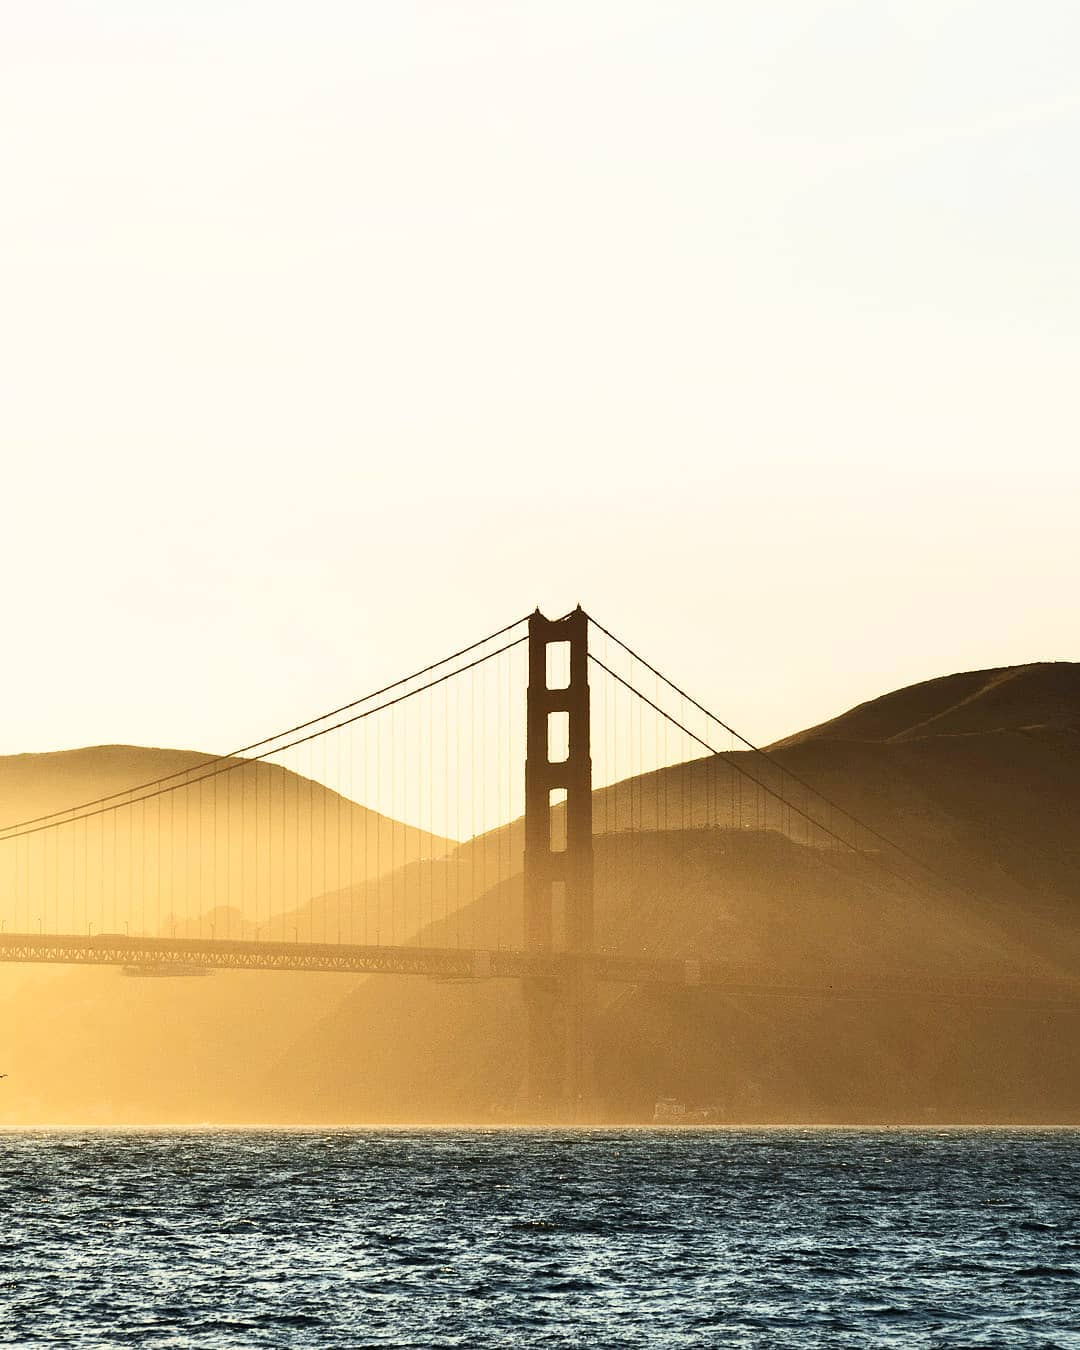 6è Premi Instagram: "Golden hour near the Golden Gate Bridge." Foto: miquelserrra.